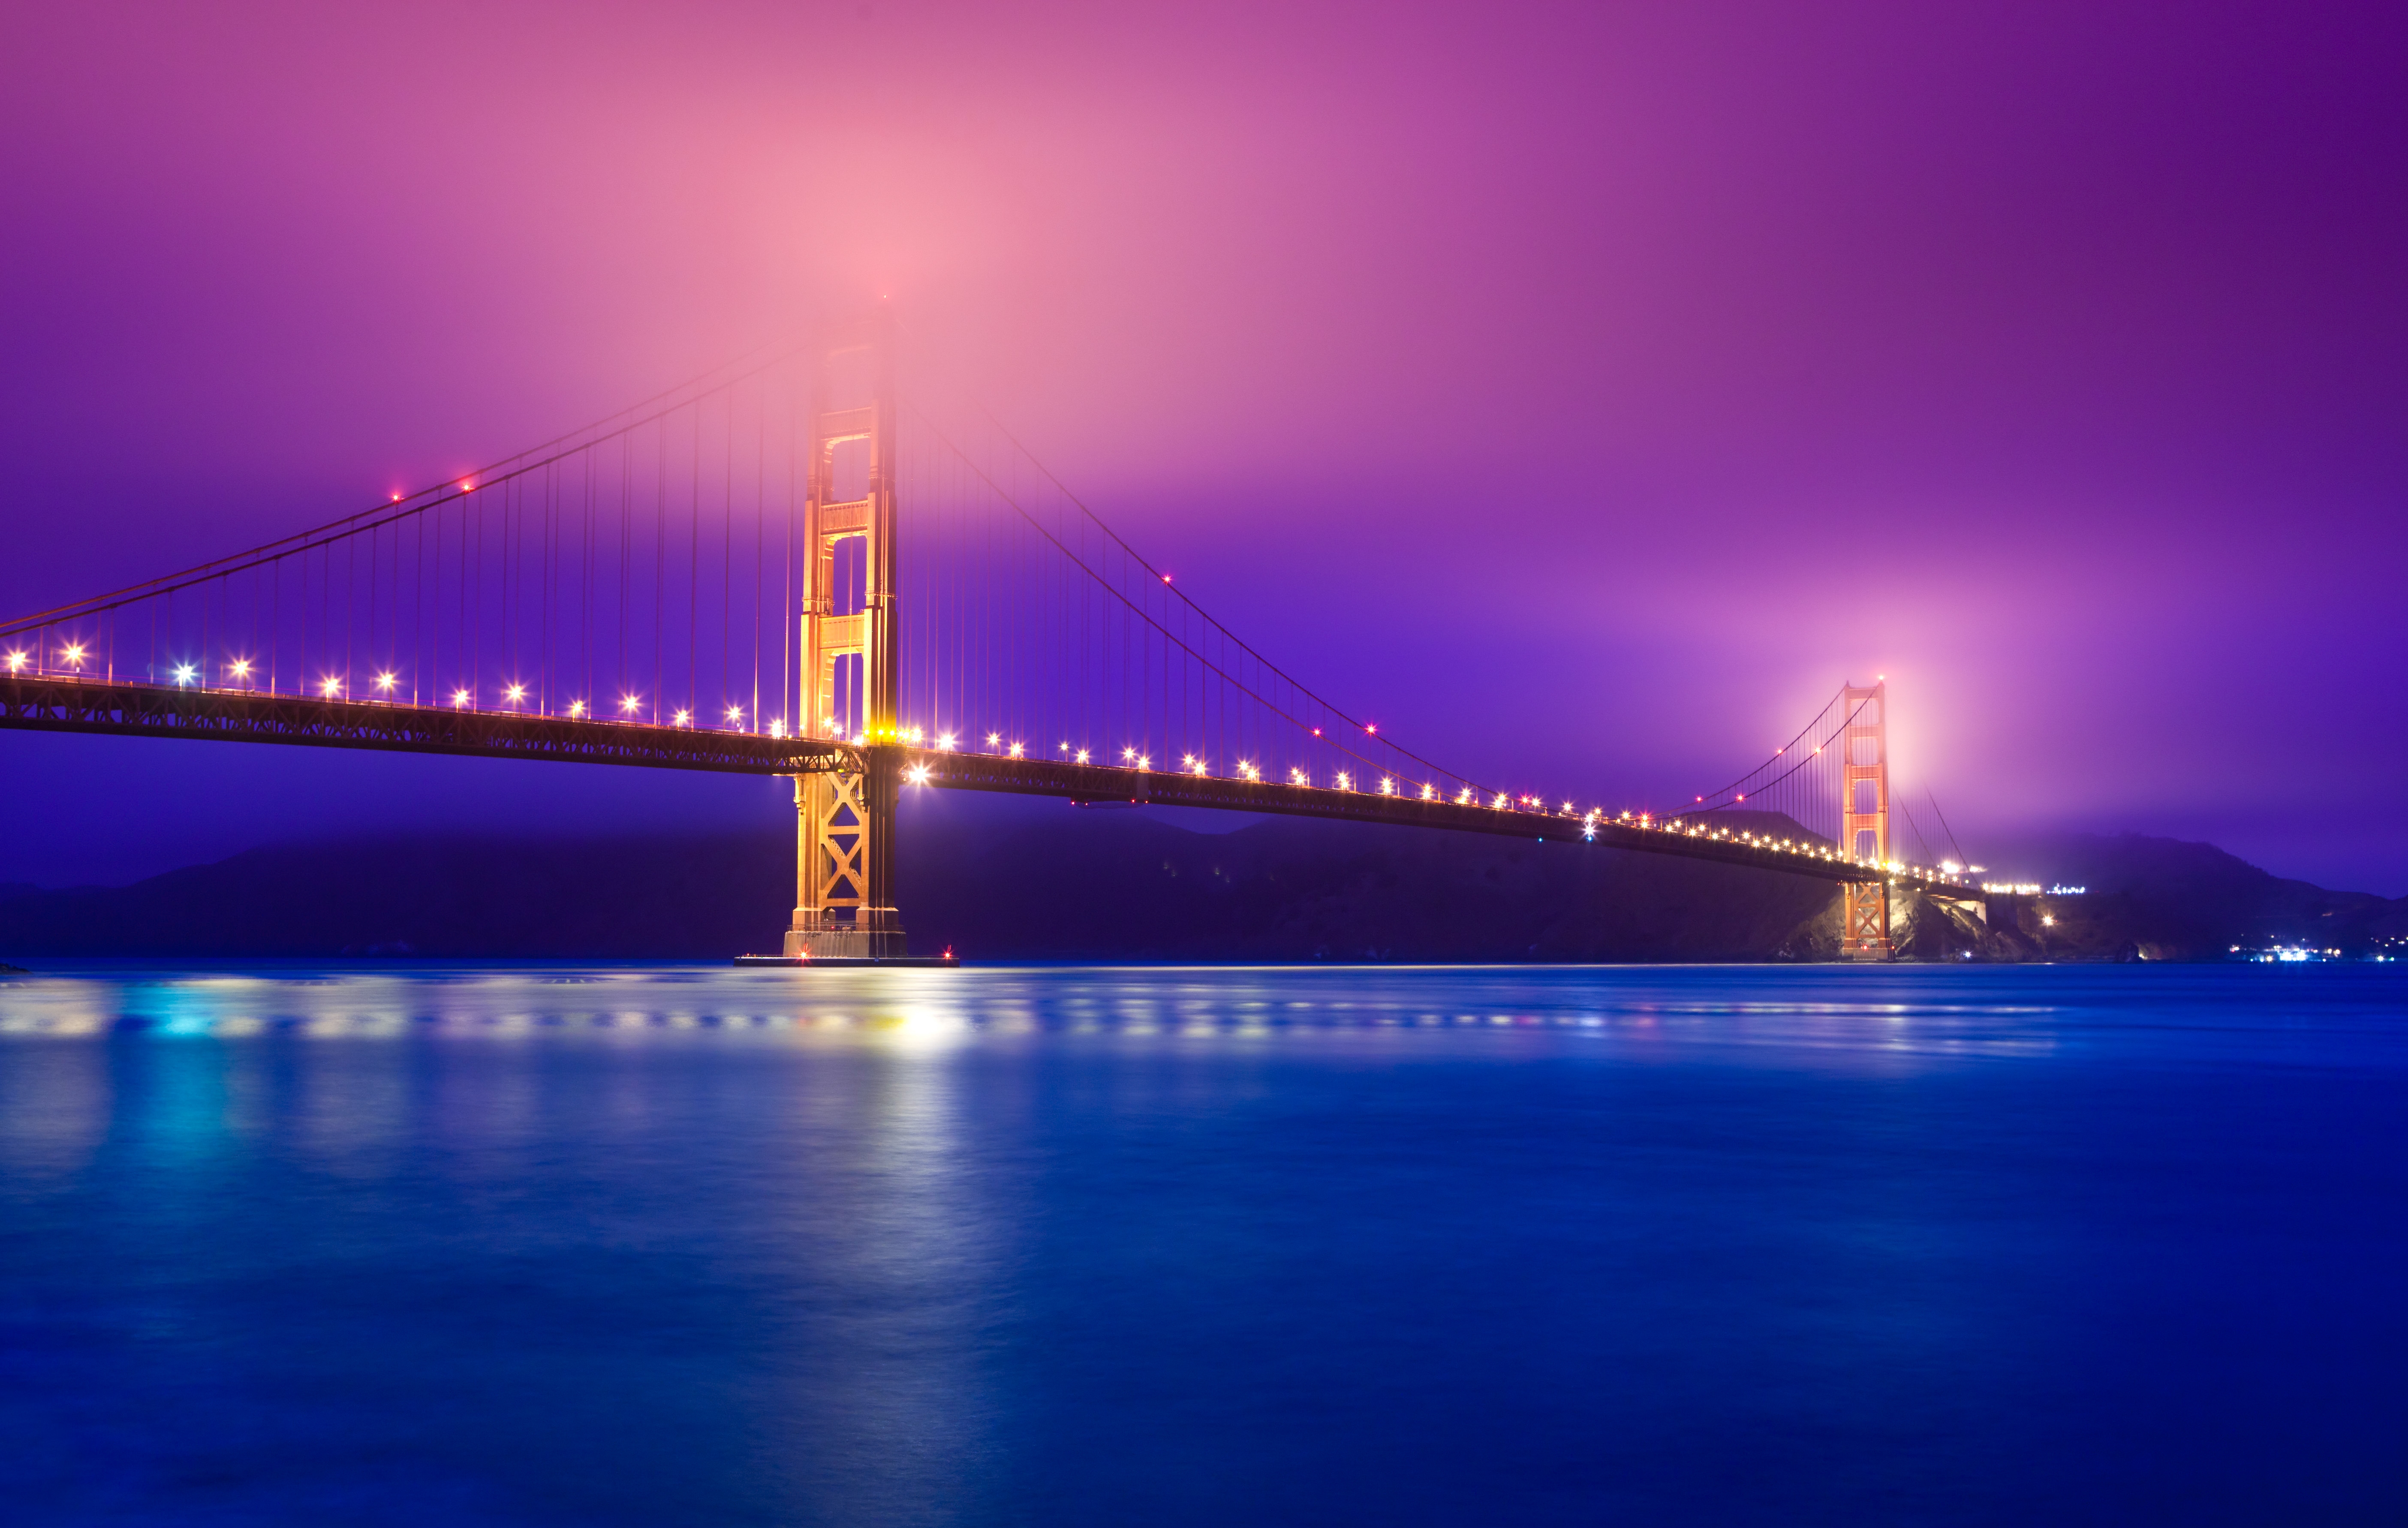 HD wallpaper, Body Of Water, 5K, Pacific Ocean, Pink Sky, Golden Gate Bridge, San Francisco, Aesthetic, Night Lights, Scenic, Blue, Reflection, California